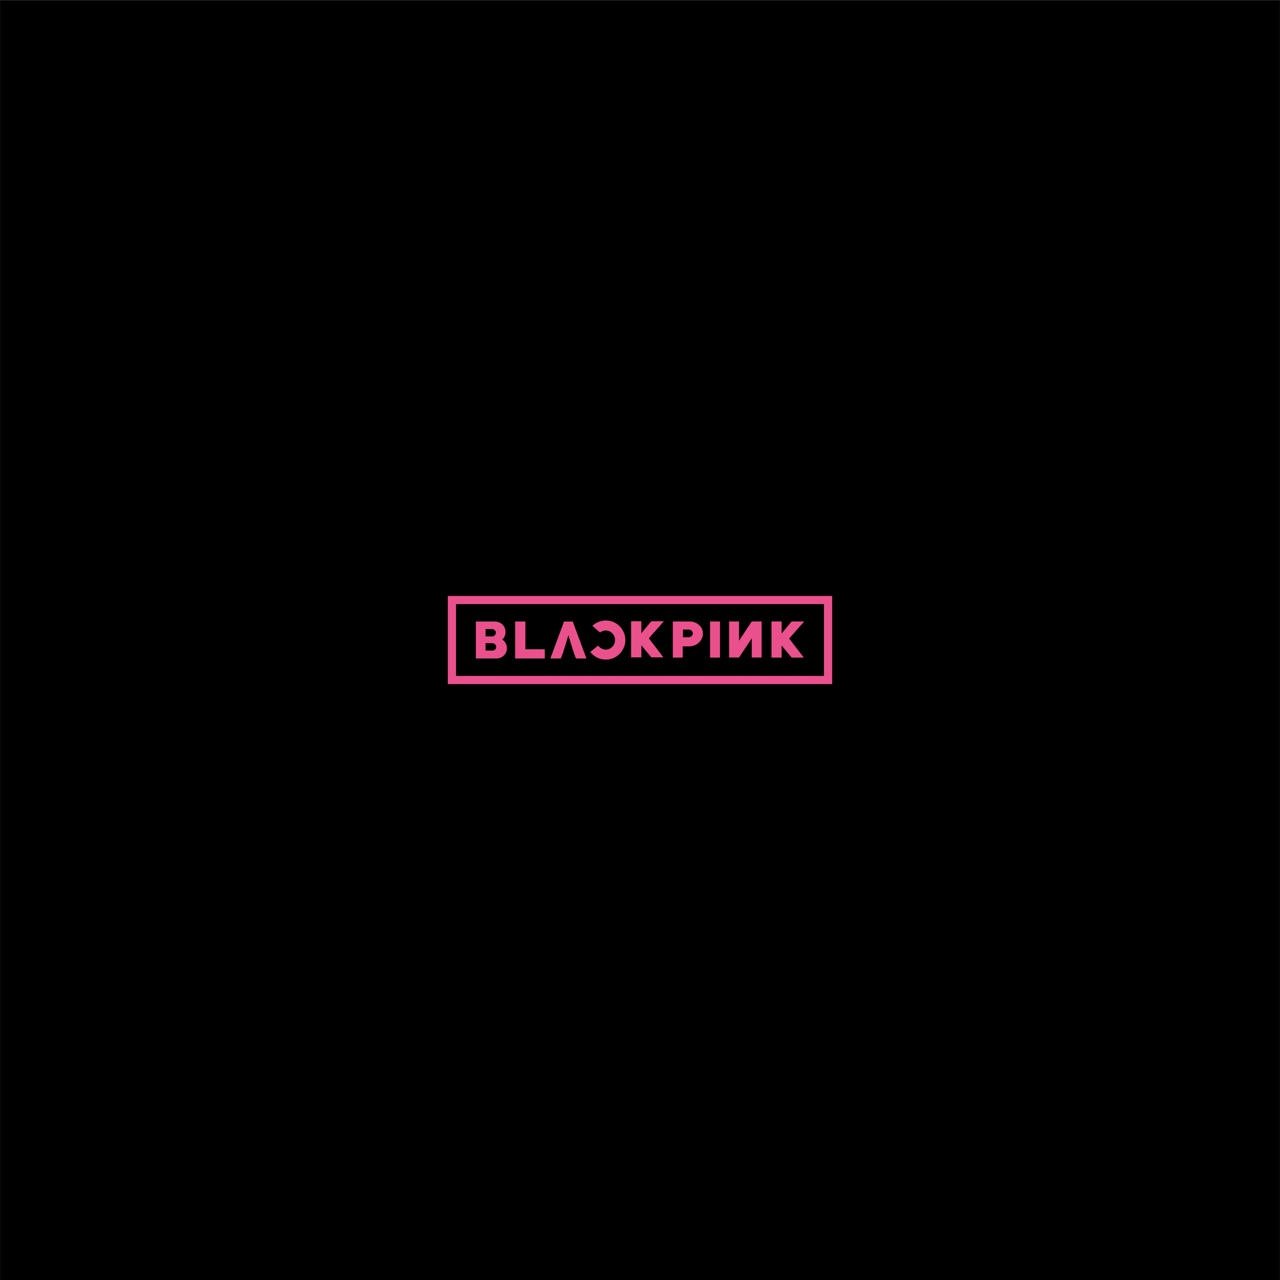 BLACKPINK — STAY - Japanese Version cover artwork